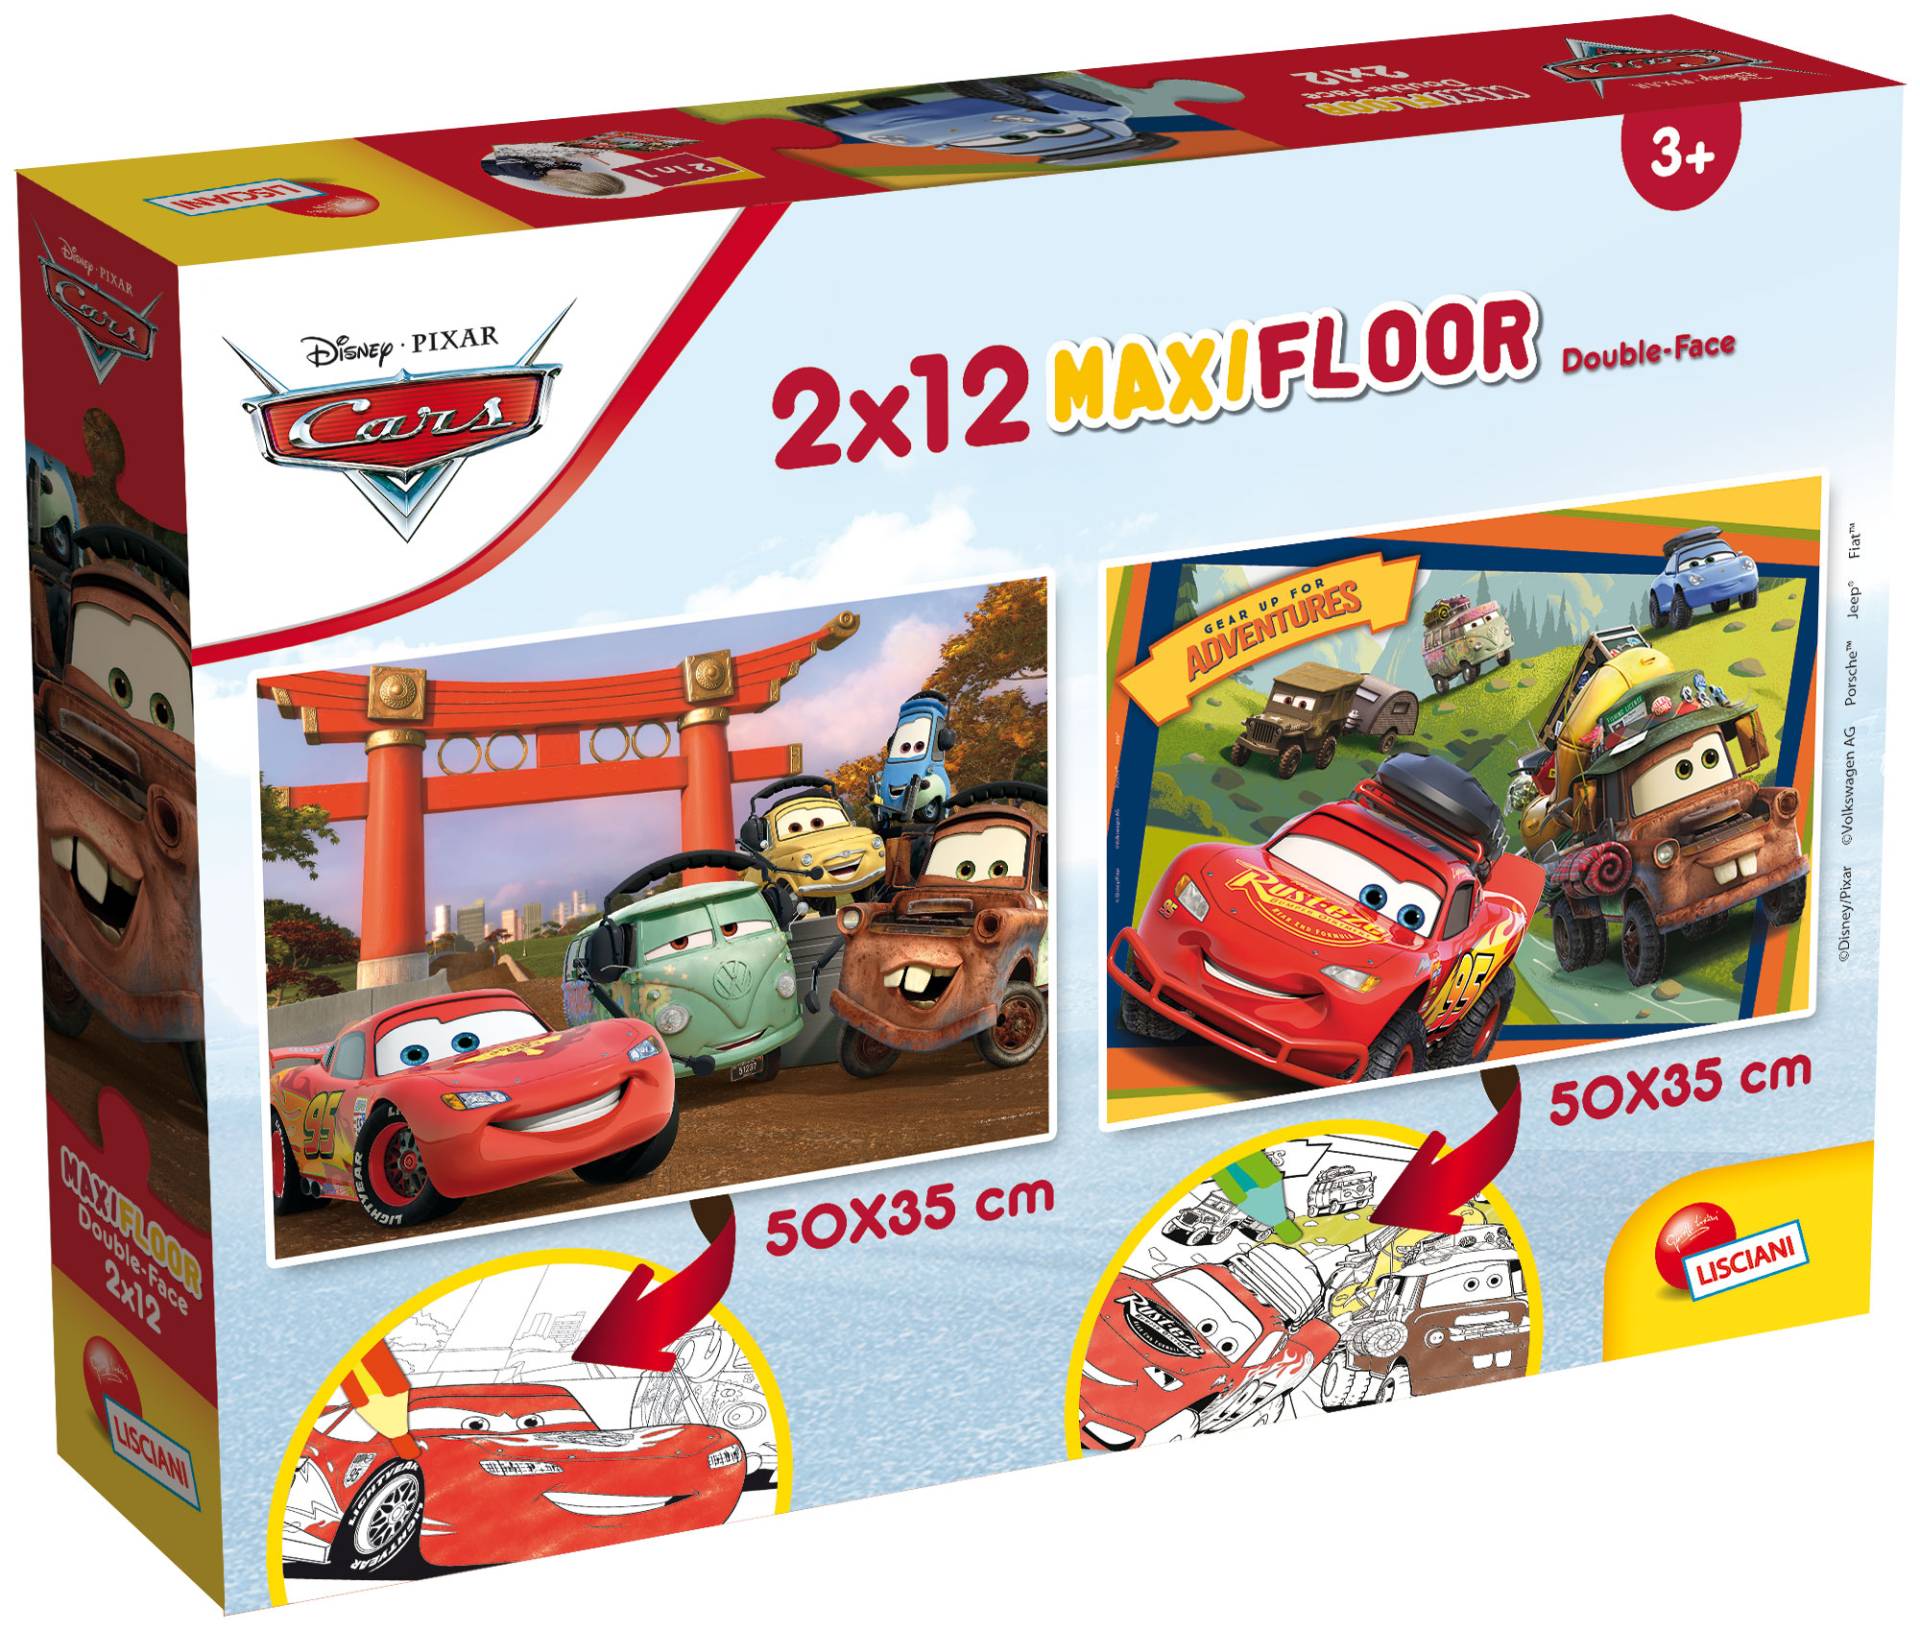 Foto 1 des Spiels DISNEY PUZZLE MAXIFLOOR 2 x 12 CARS